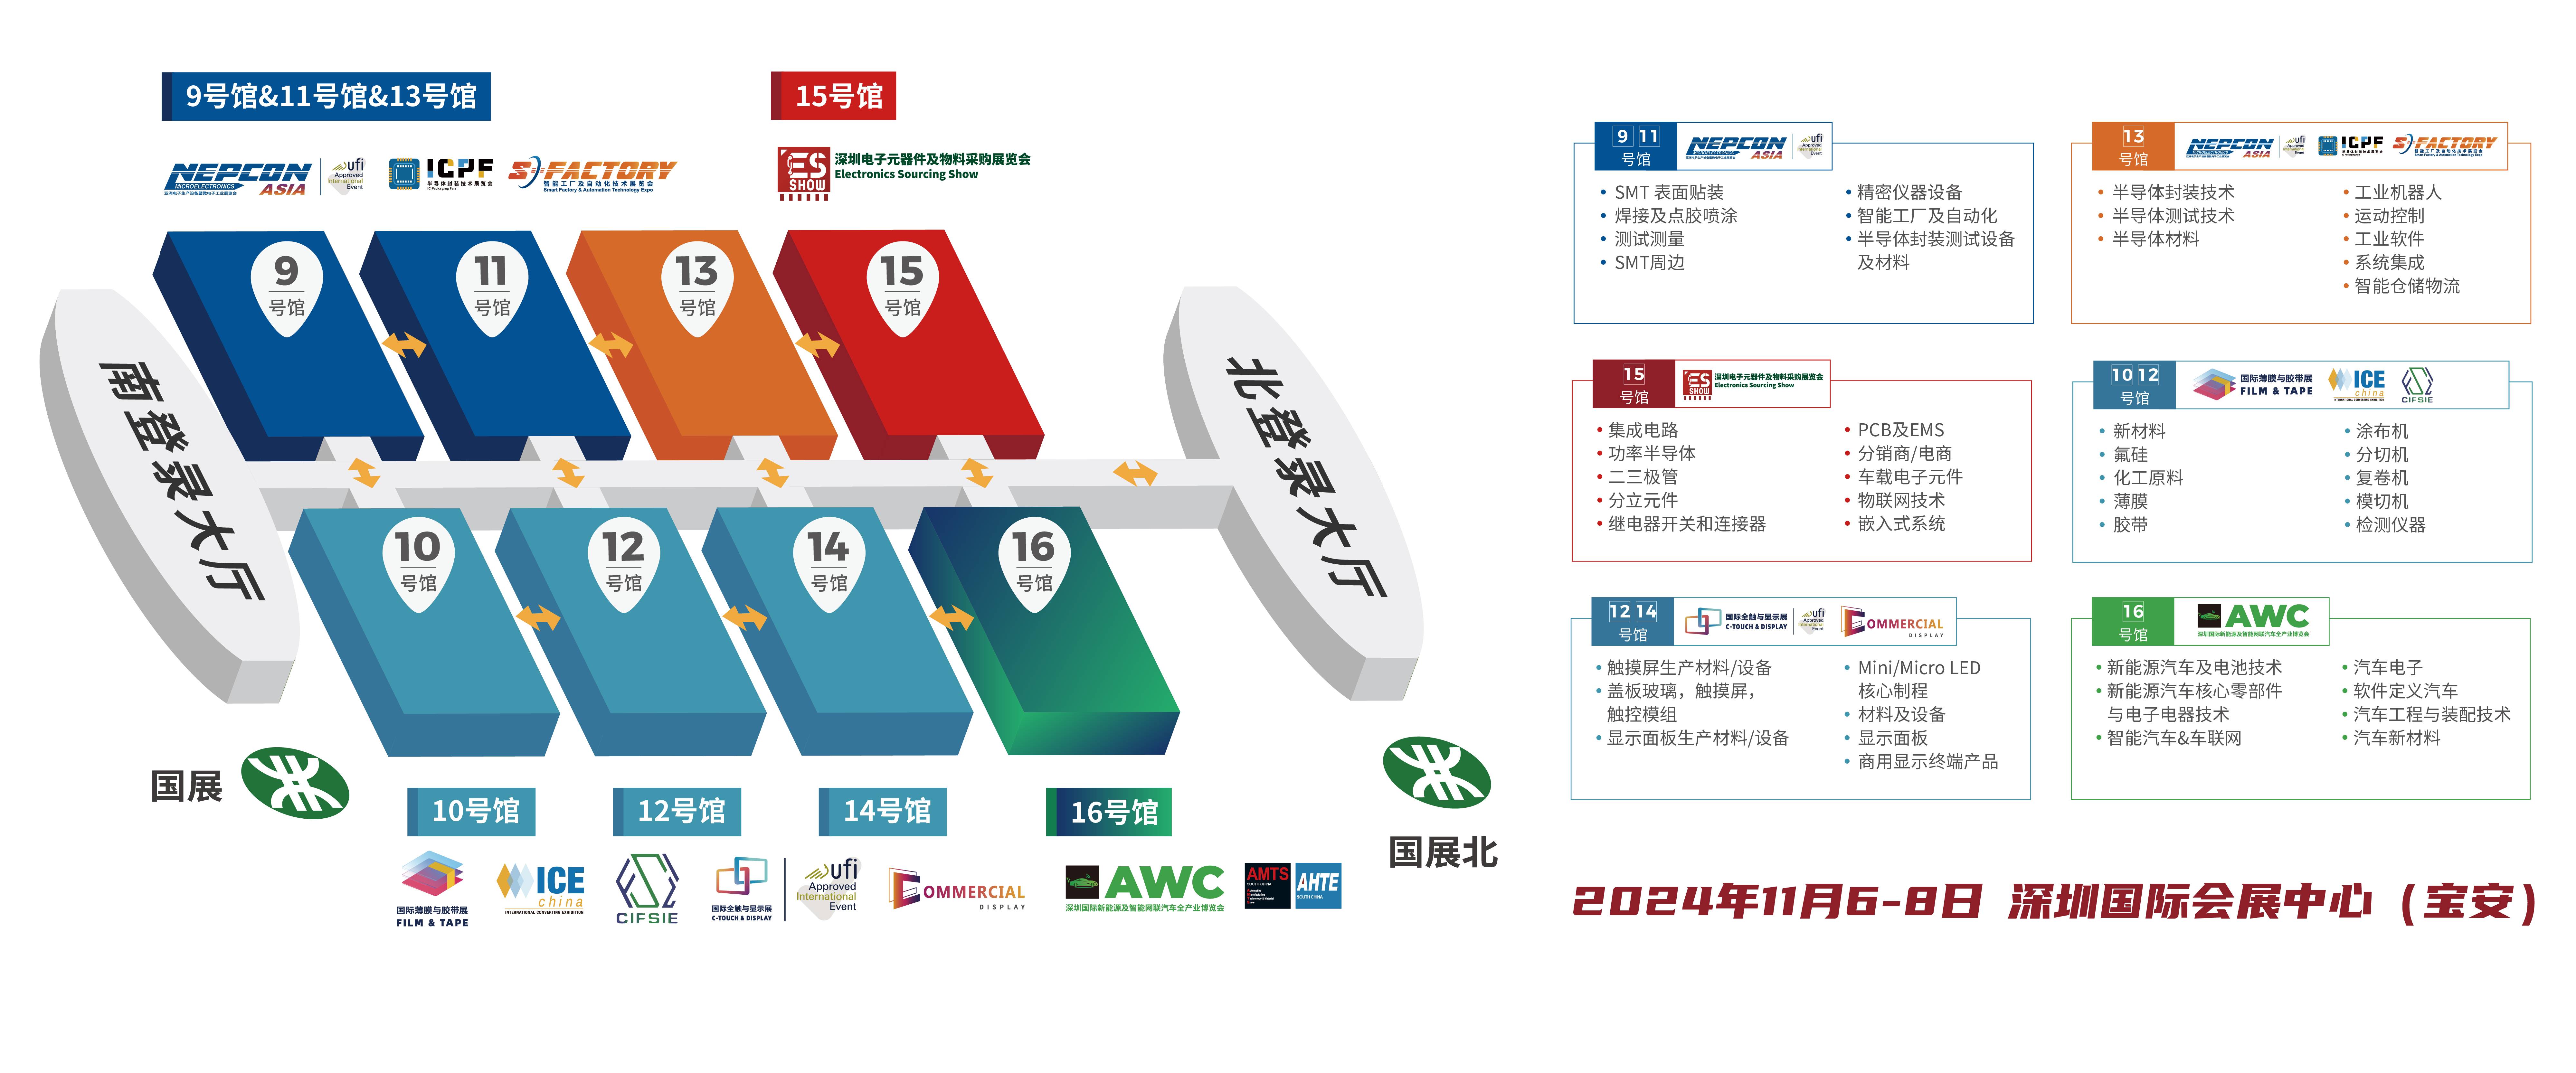 ESSHOW 深圳电子展 传感器 元器件 华南电子展